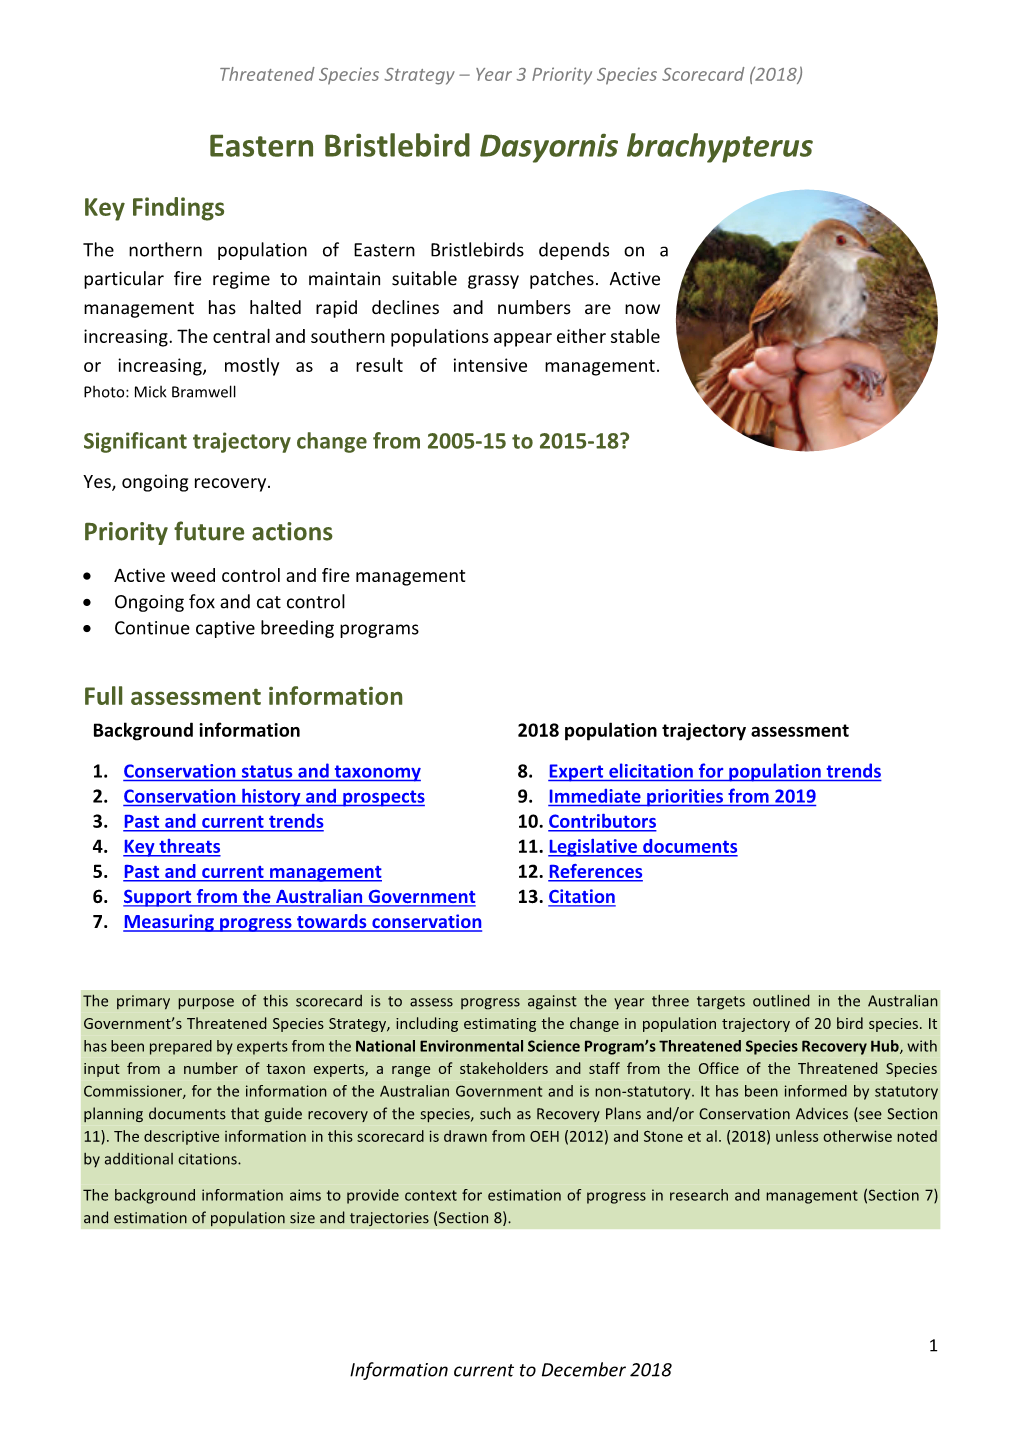 Threatened Species Strategy Year 3 Scorecard – Eastern Bristlebird